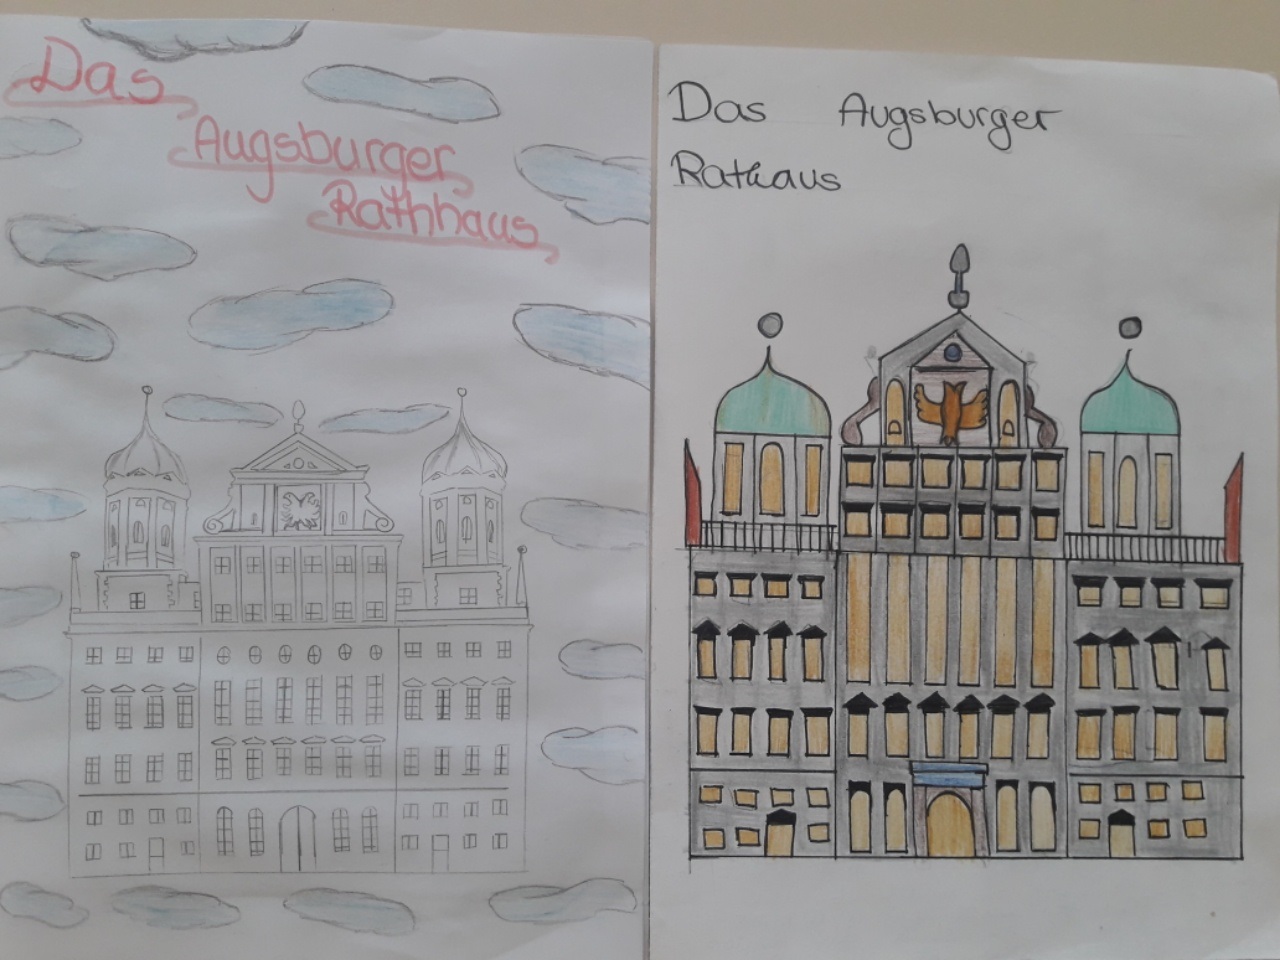 Renaissance pur - unser Augsburger Rathaus